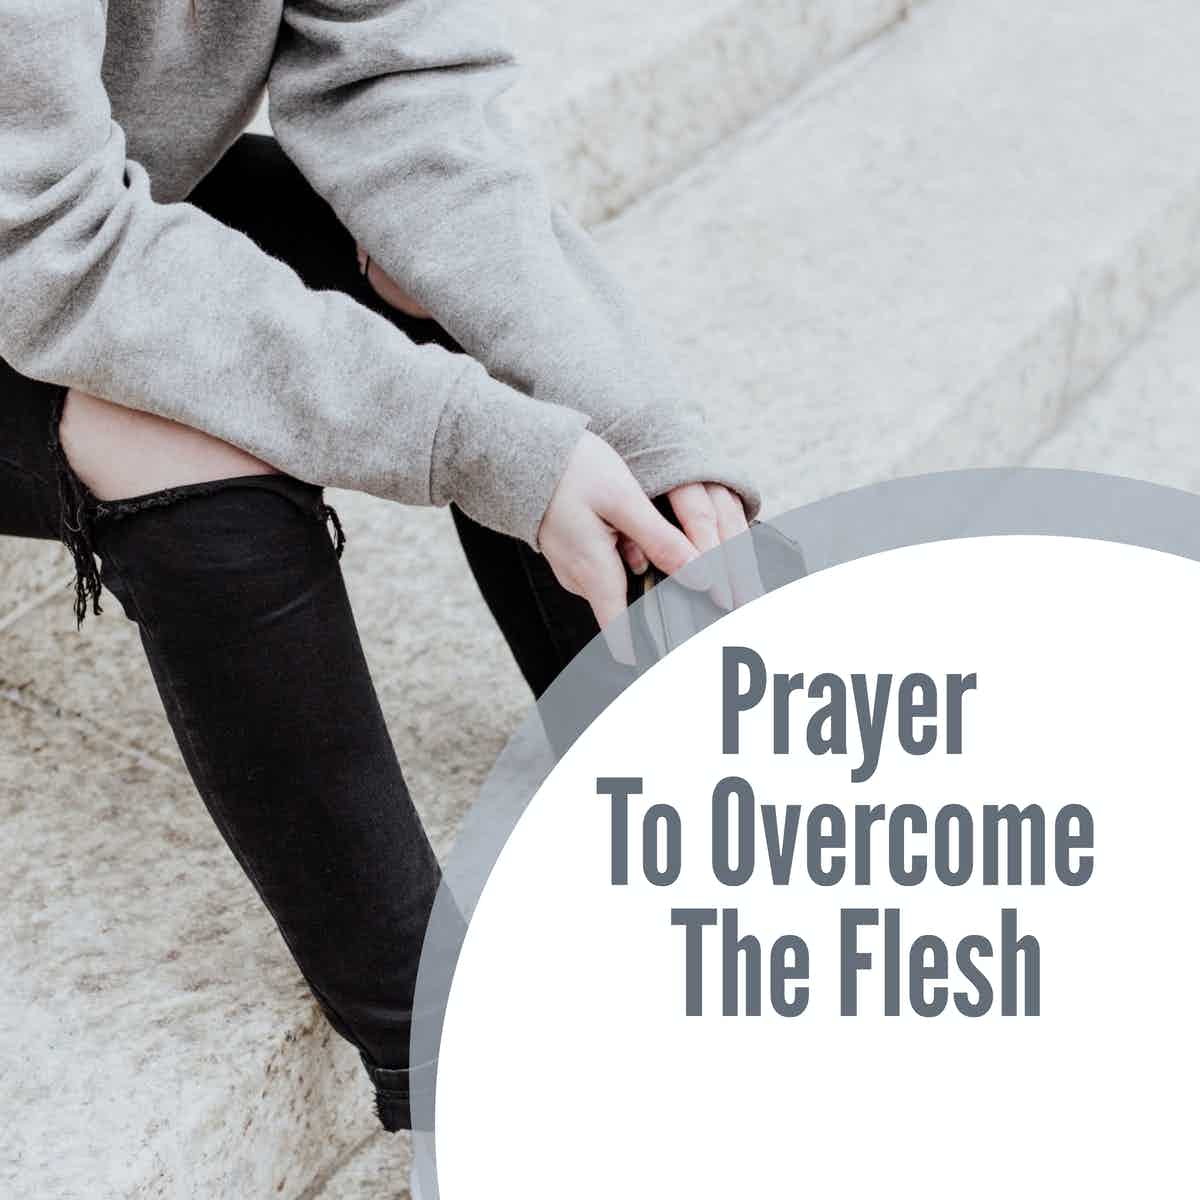 Prayer to overcome the flesh